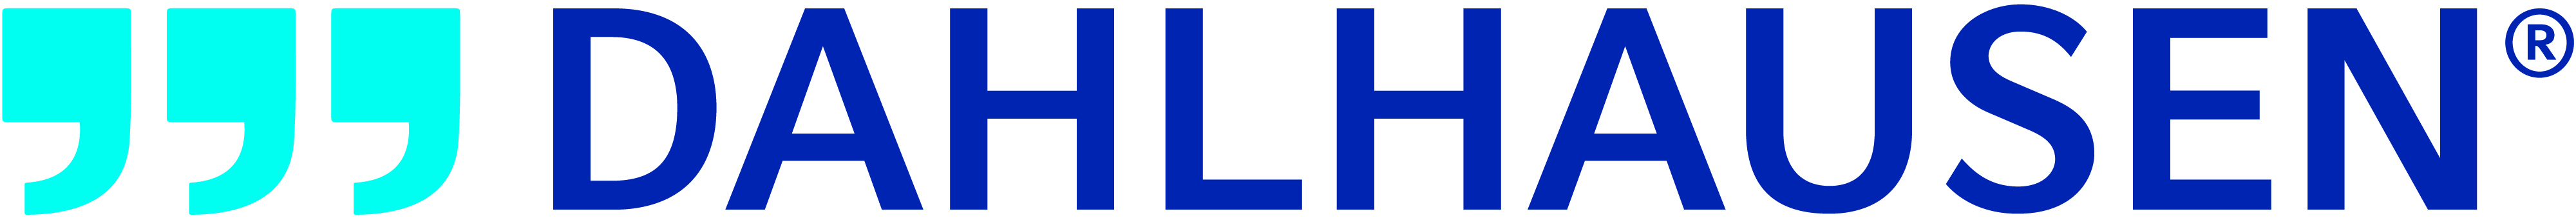 P. J. Dahlhausen & Co. GmbH